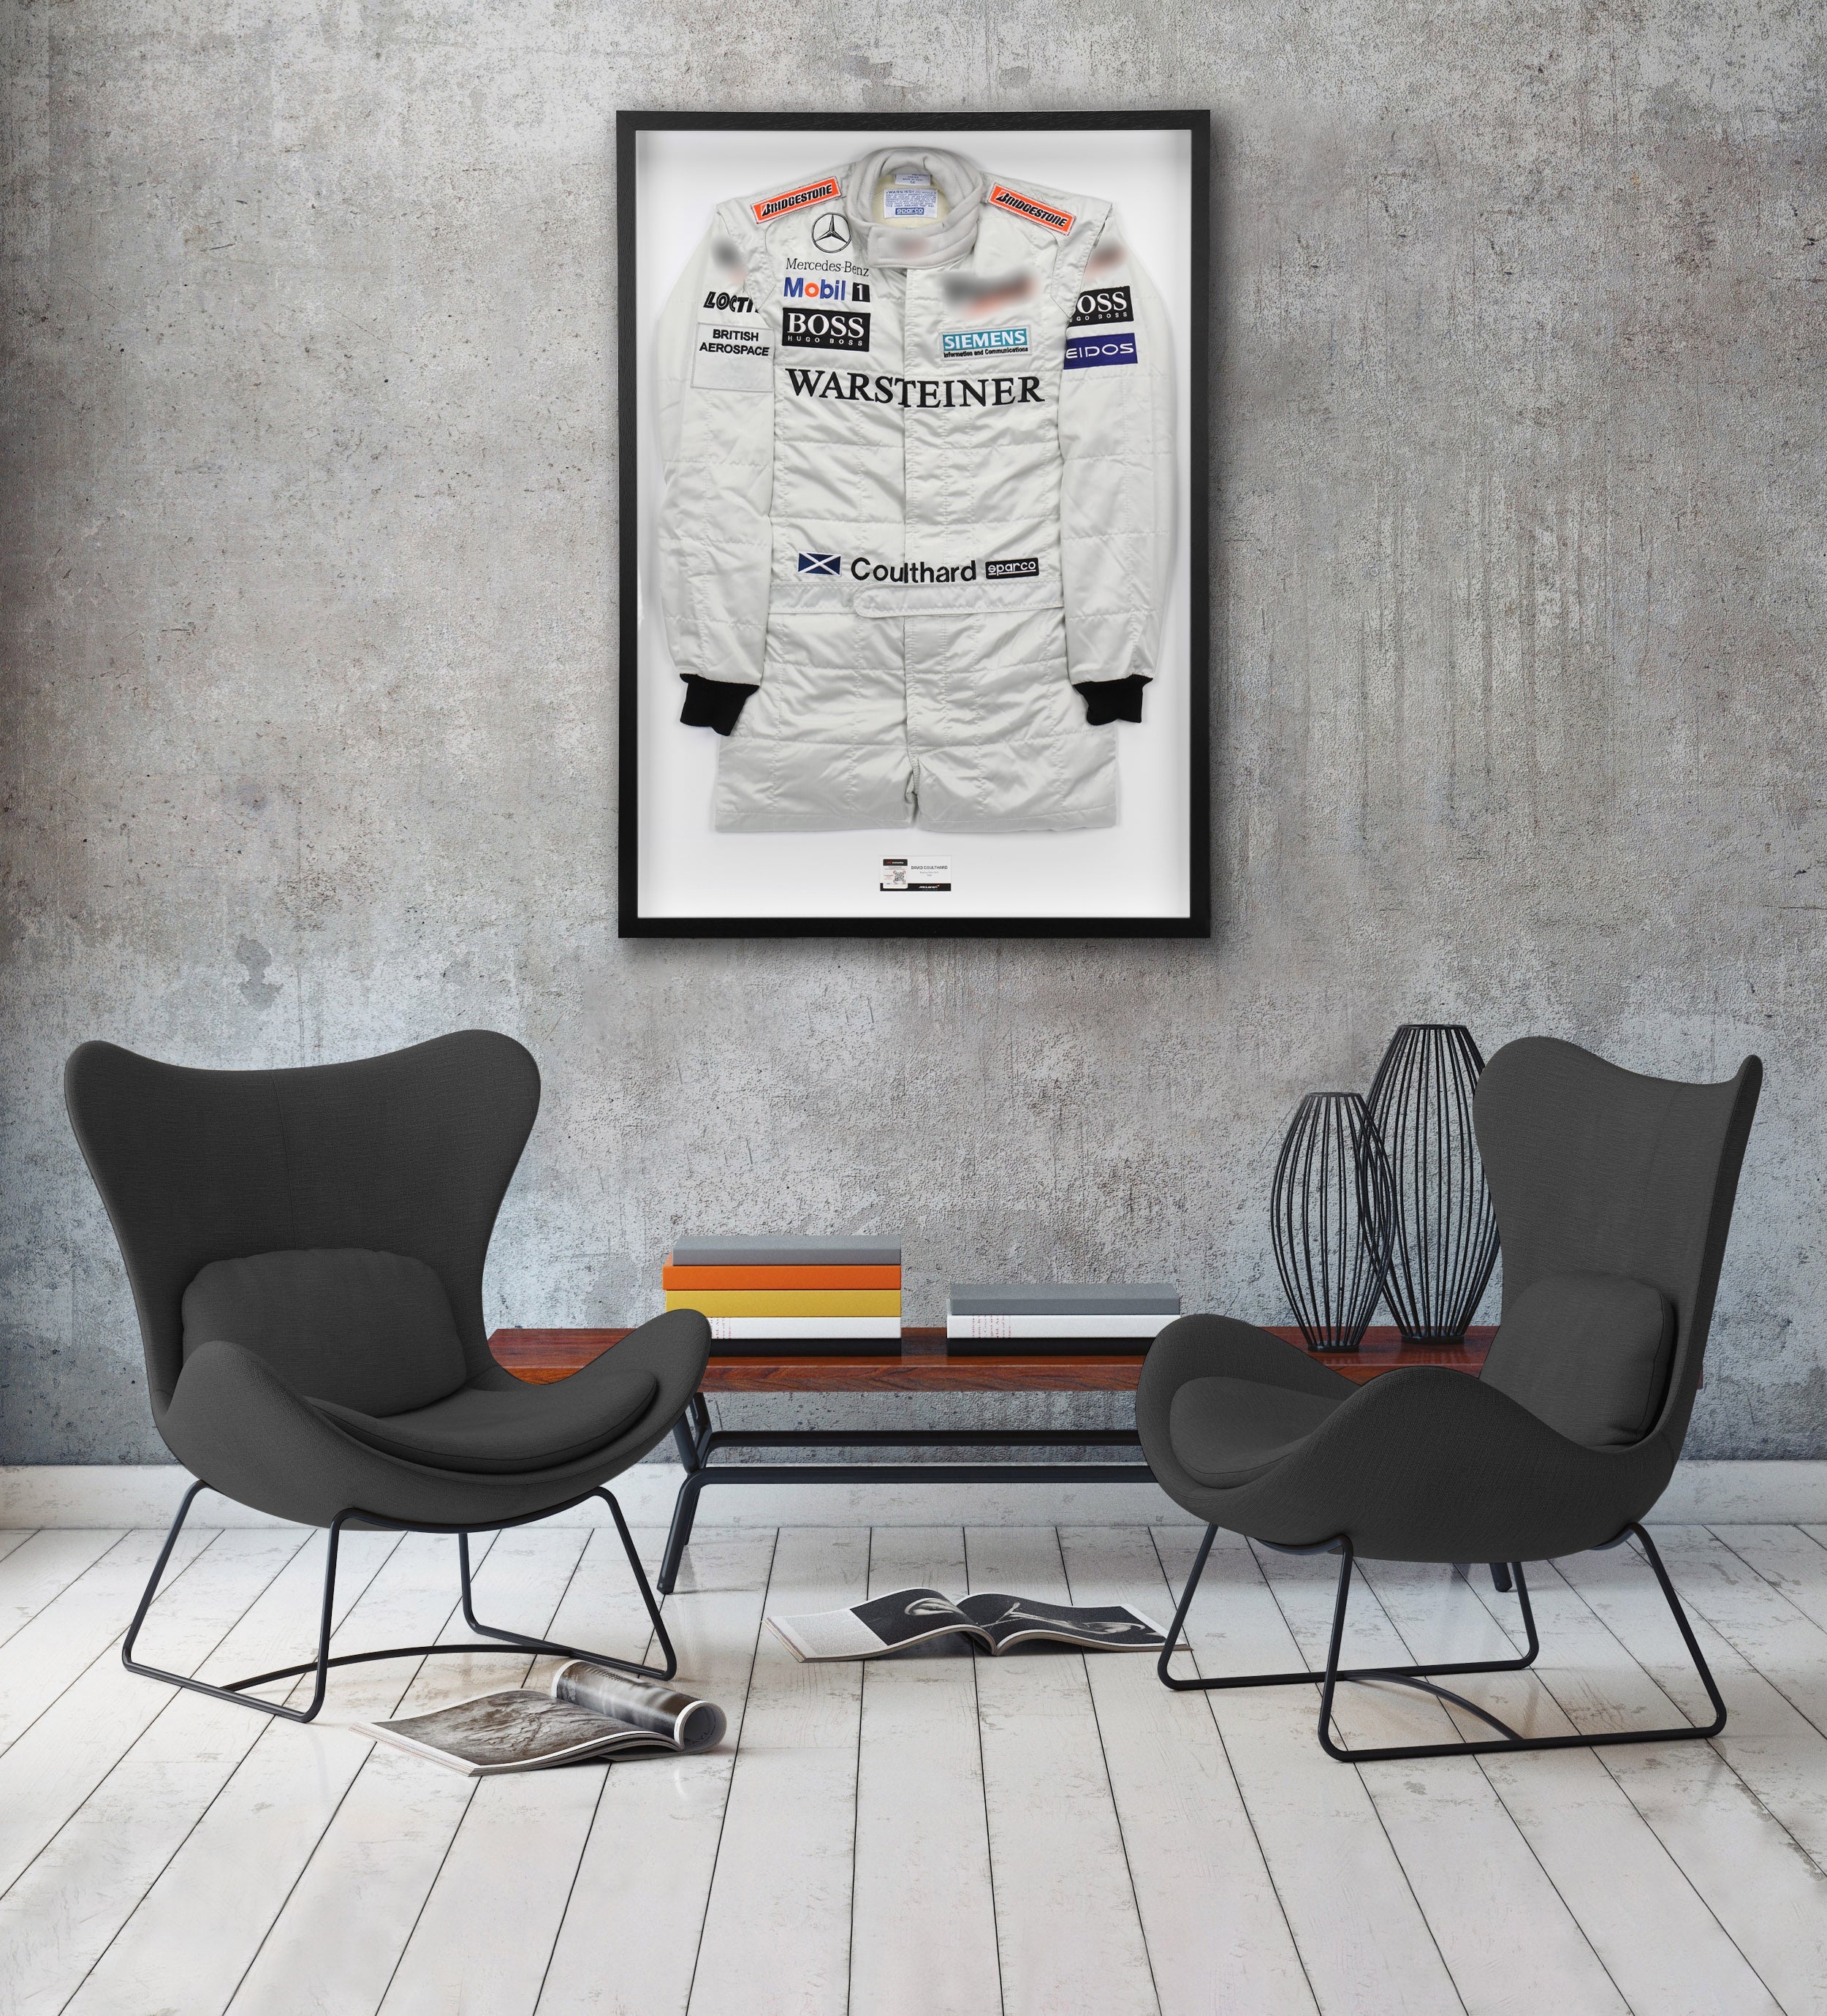 David Coulthard 1998 Replica McLaren F1 Team Race Suit with Warsteiner and Siemens Branding